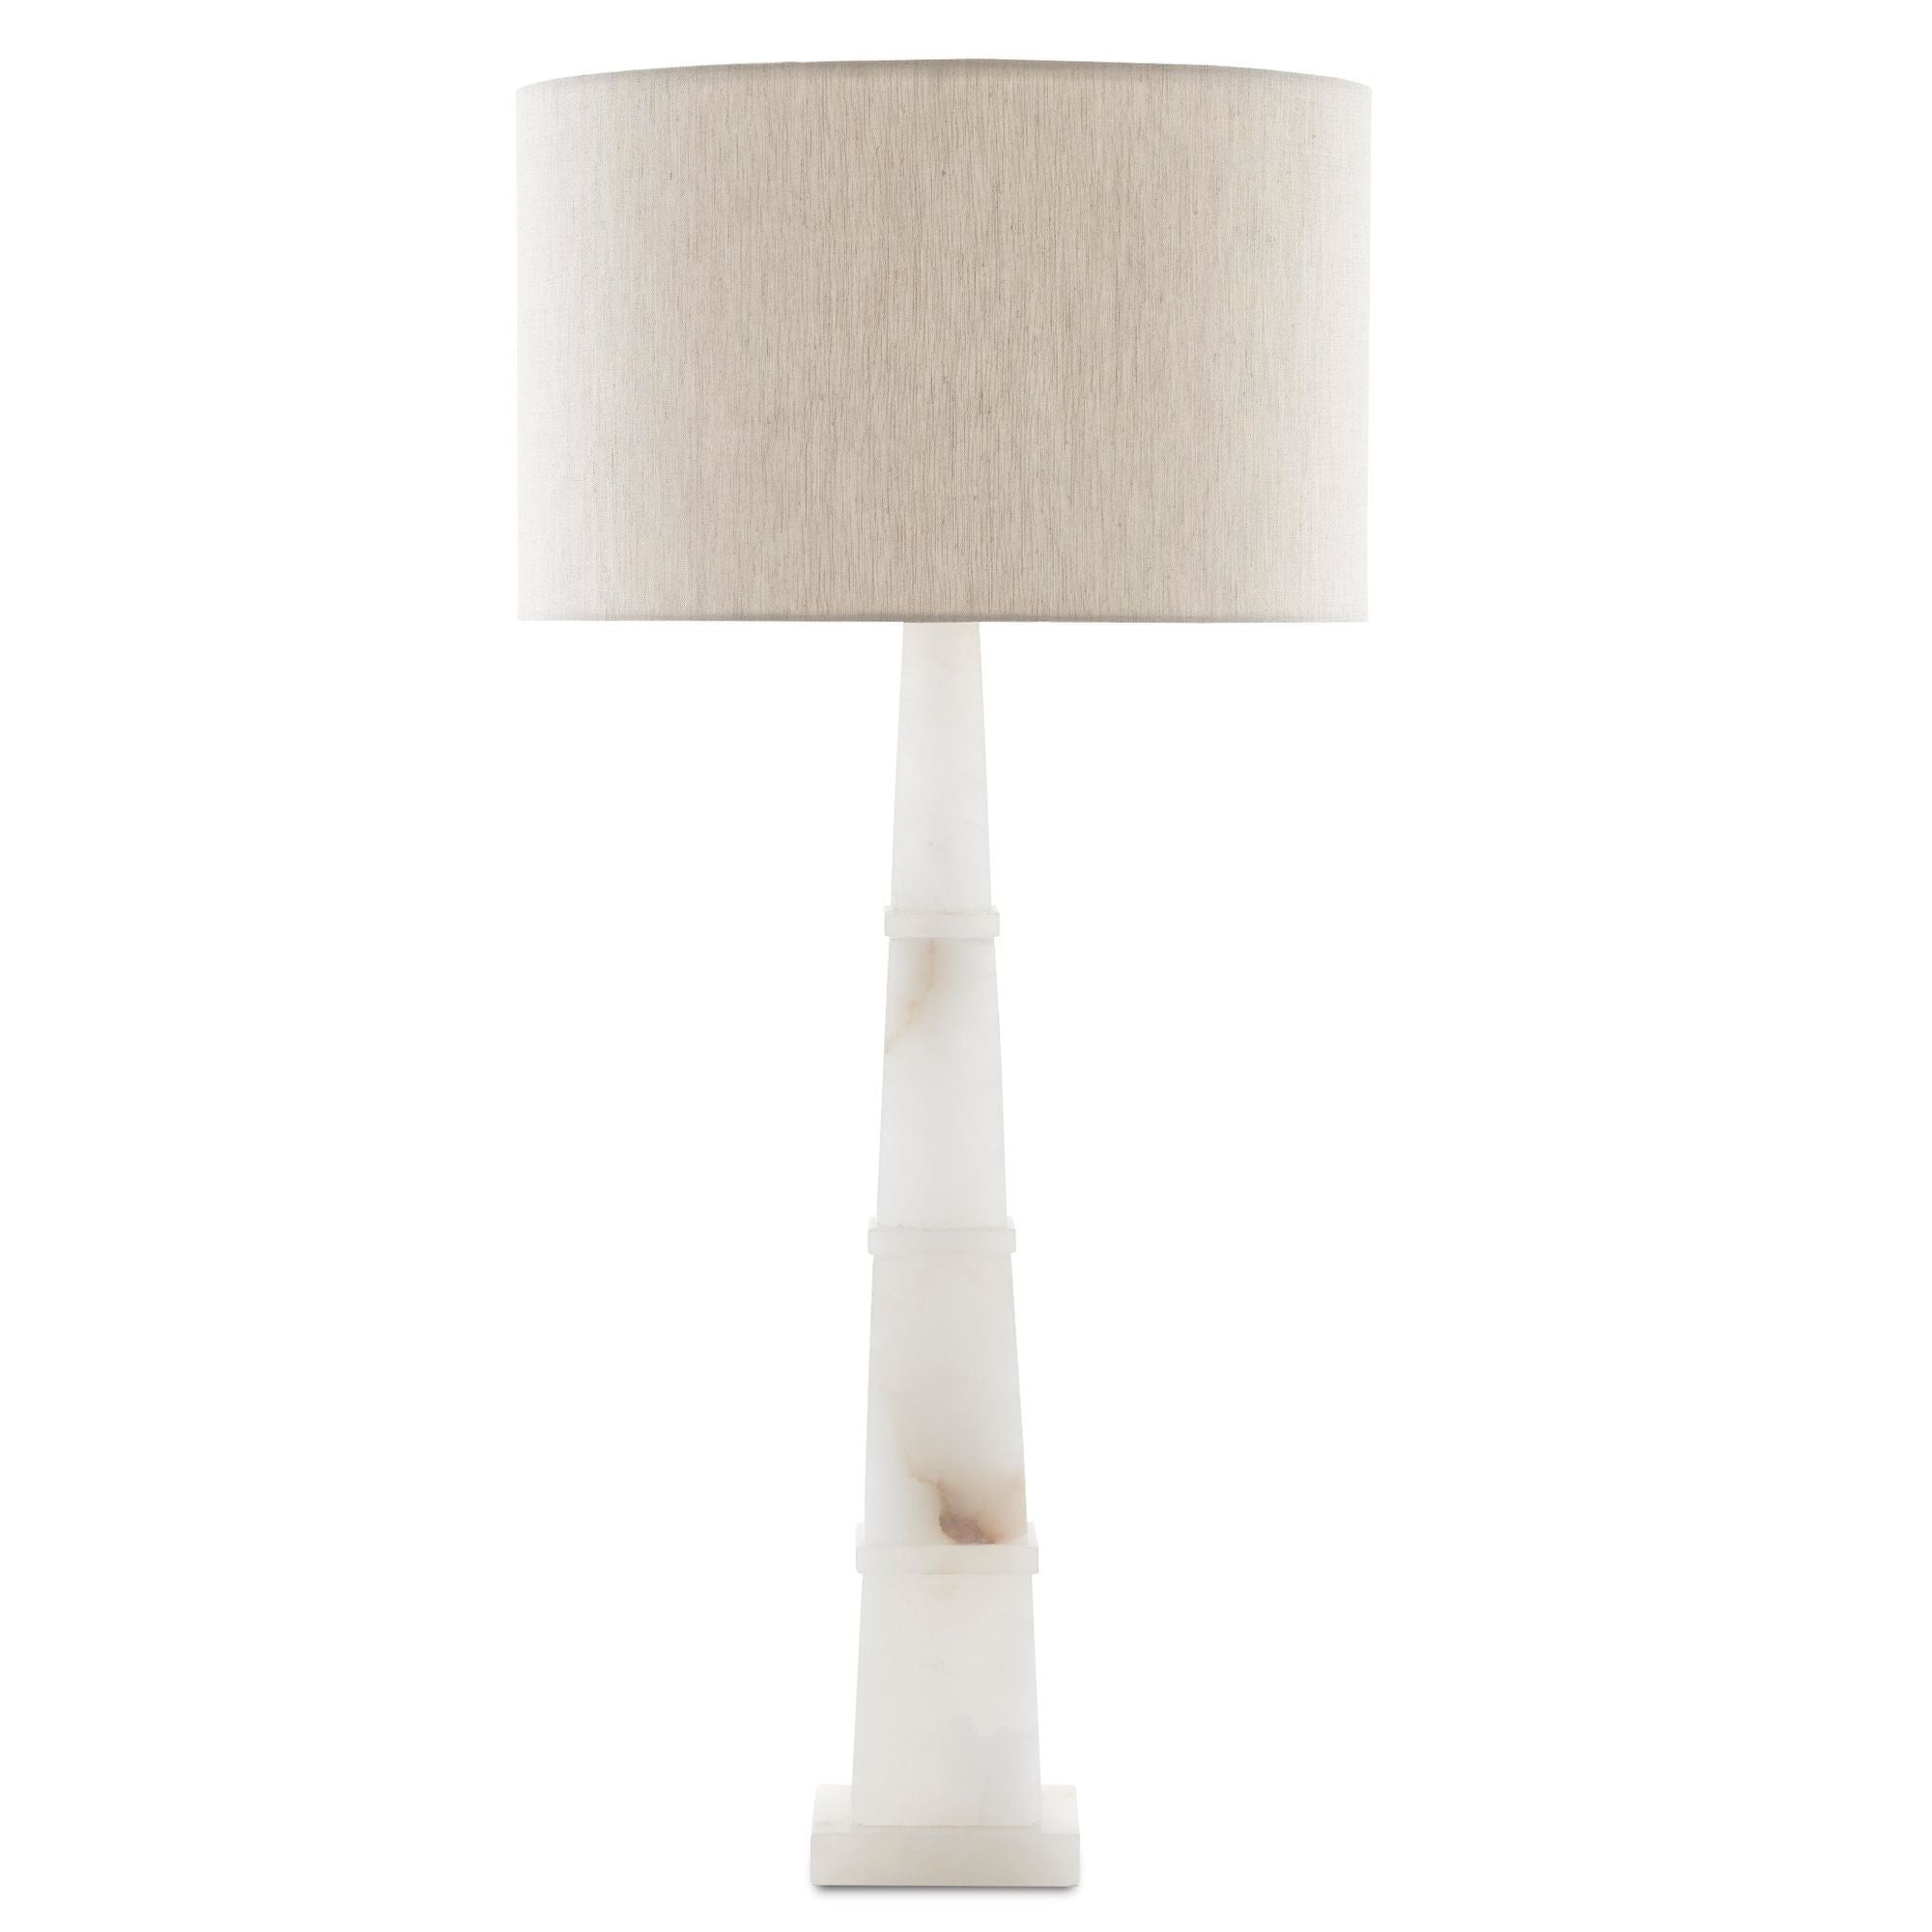 Alabastro White Table Lamp - Alabaster/Polished Nickel